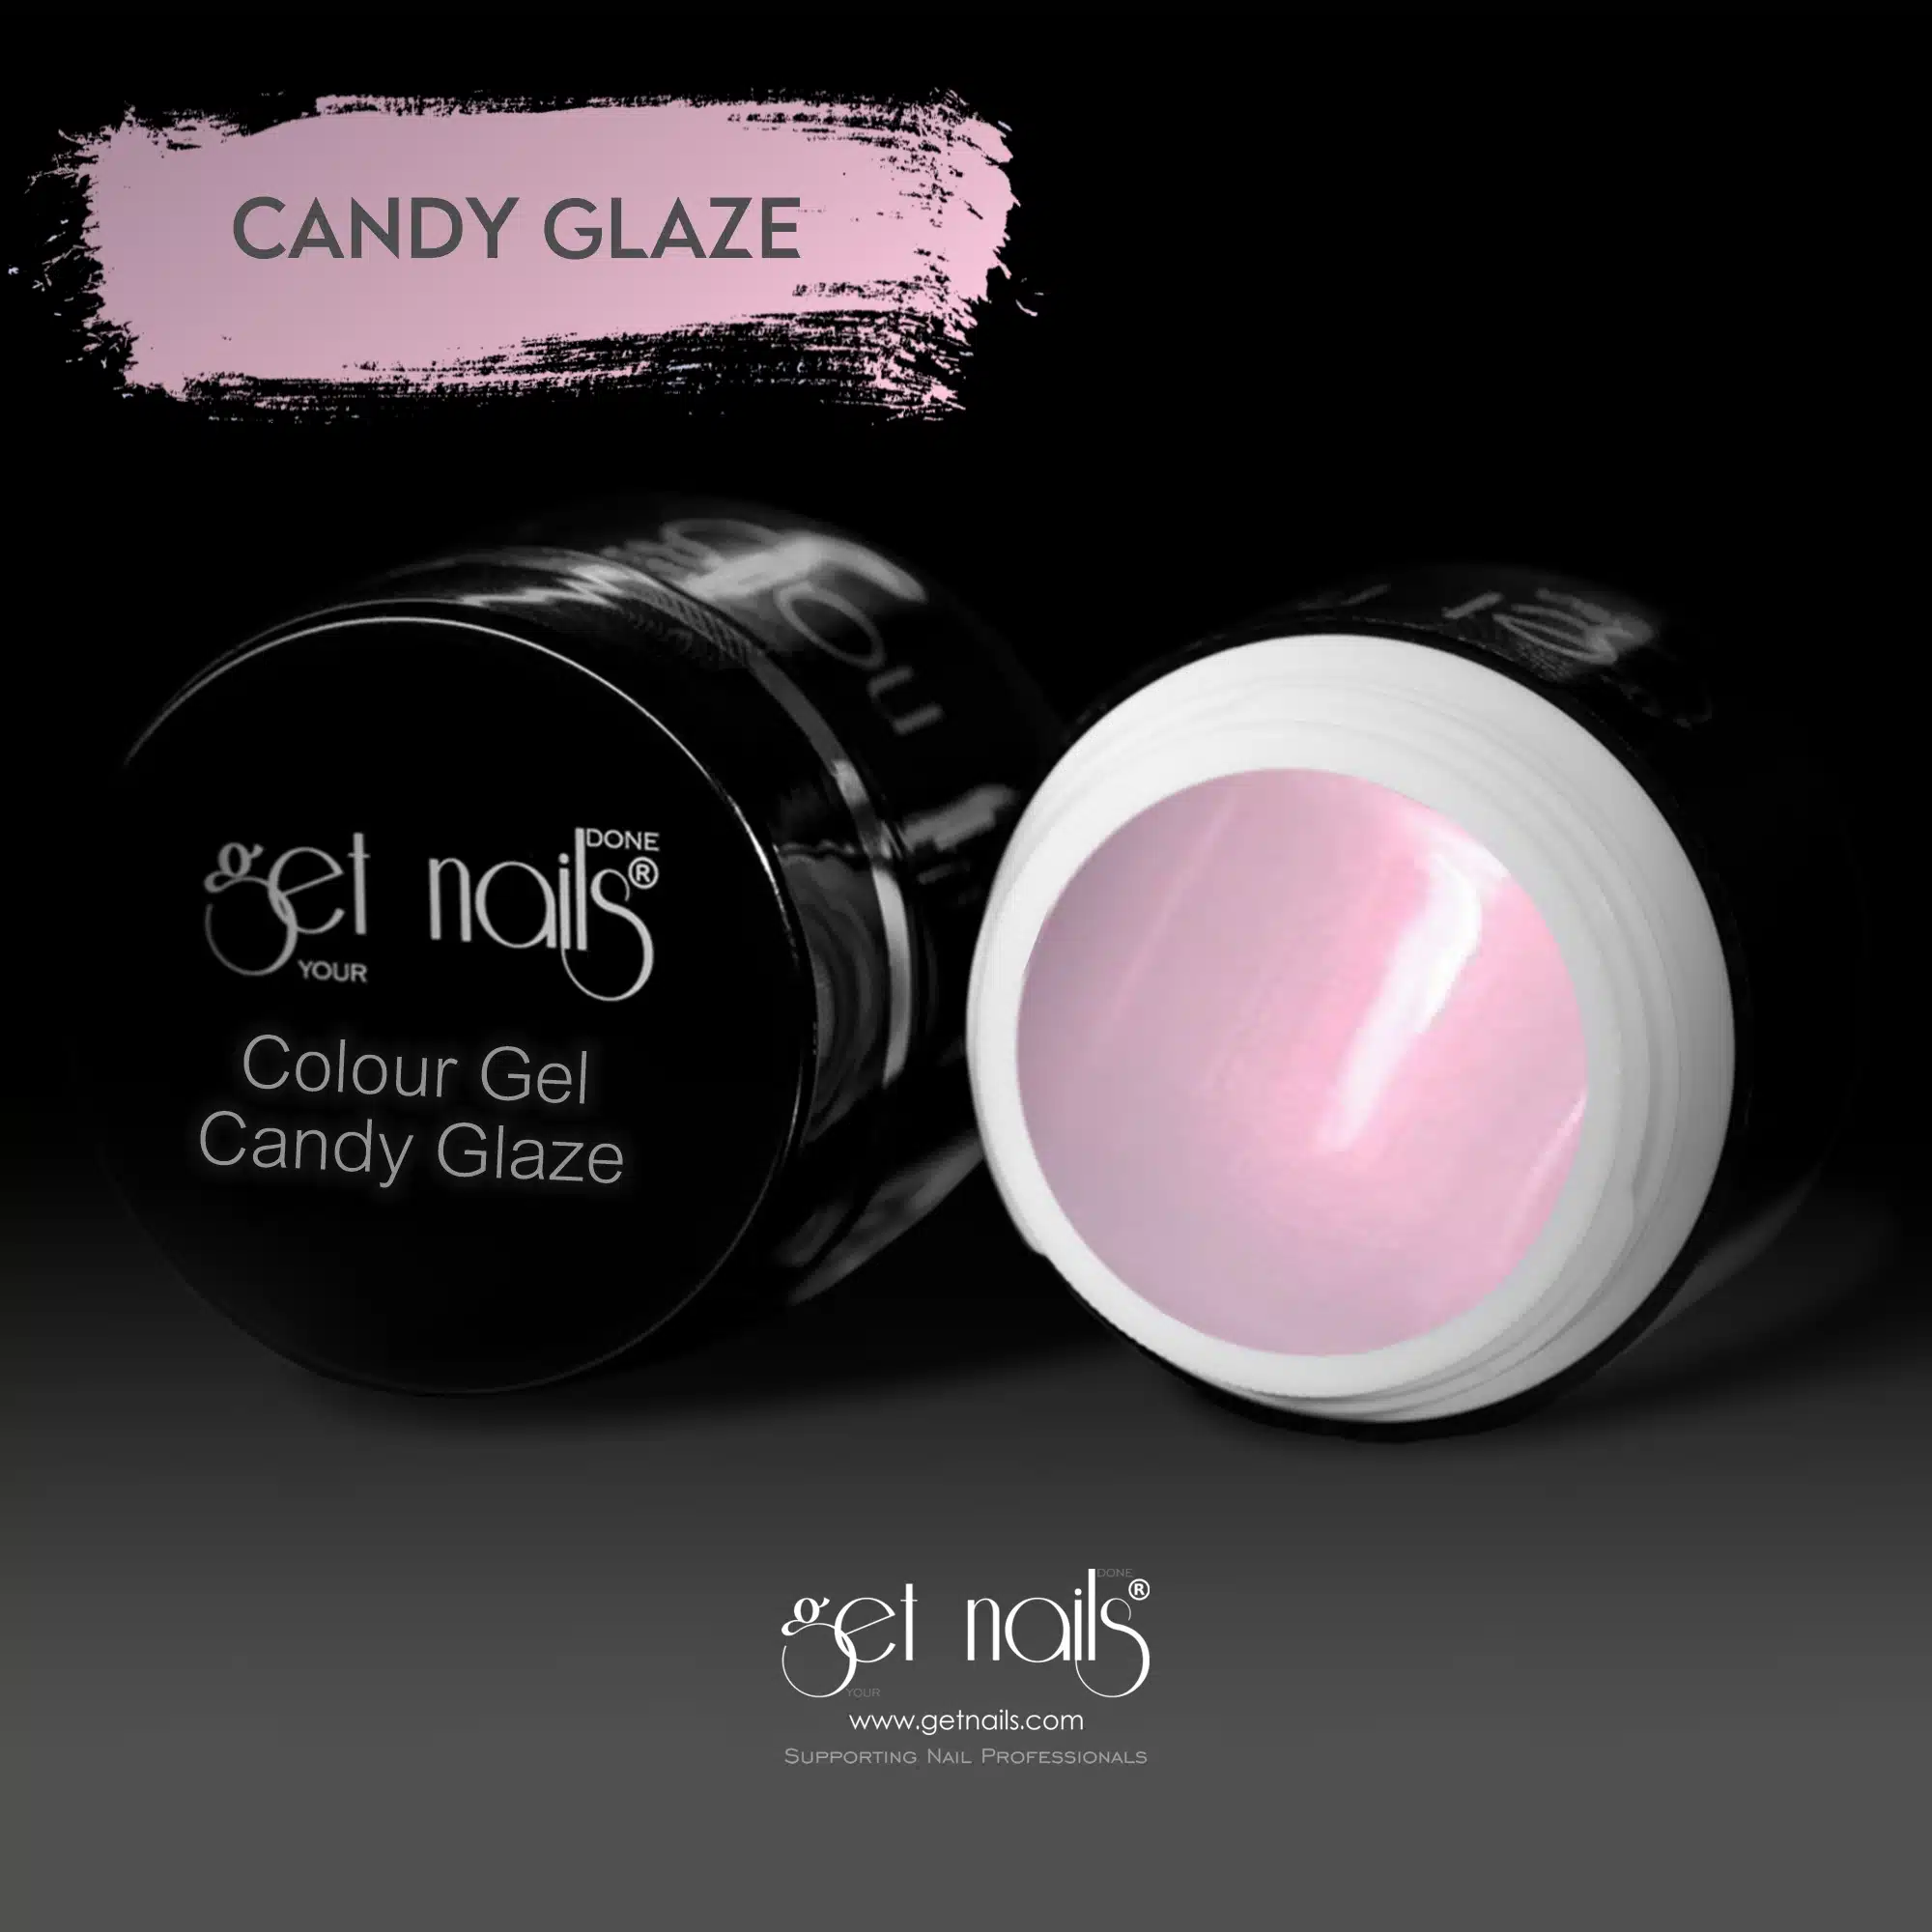 Get Nails Austria - Gel colorato Candy Glaze 5g